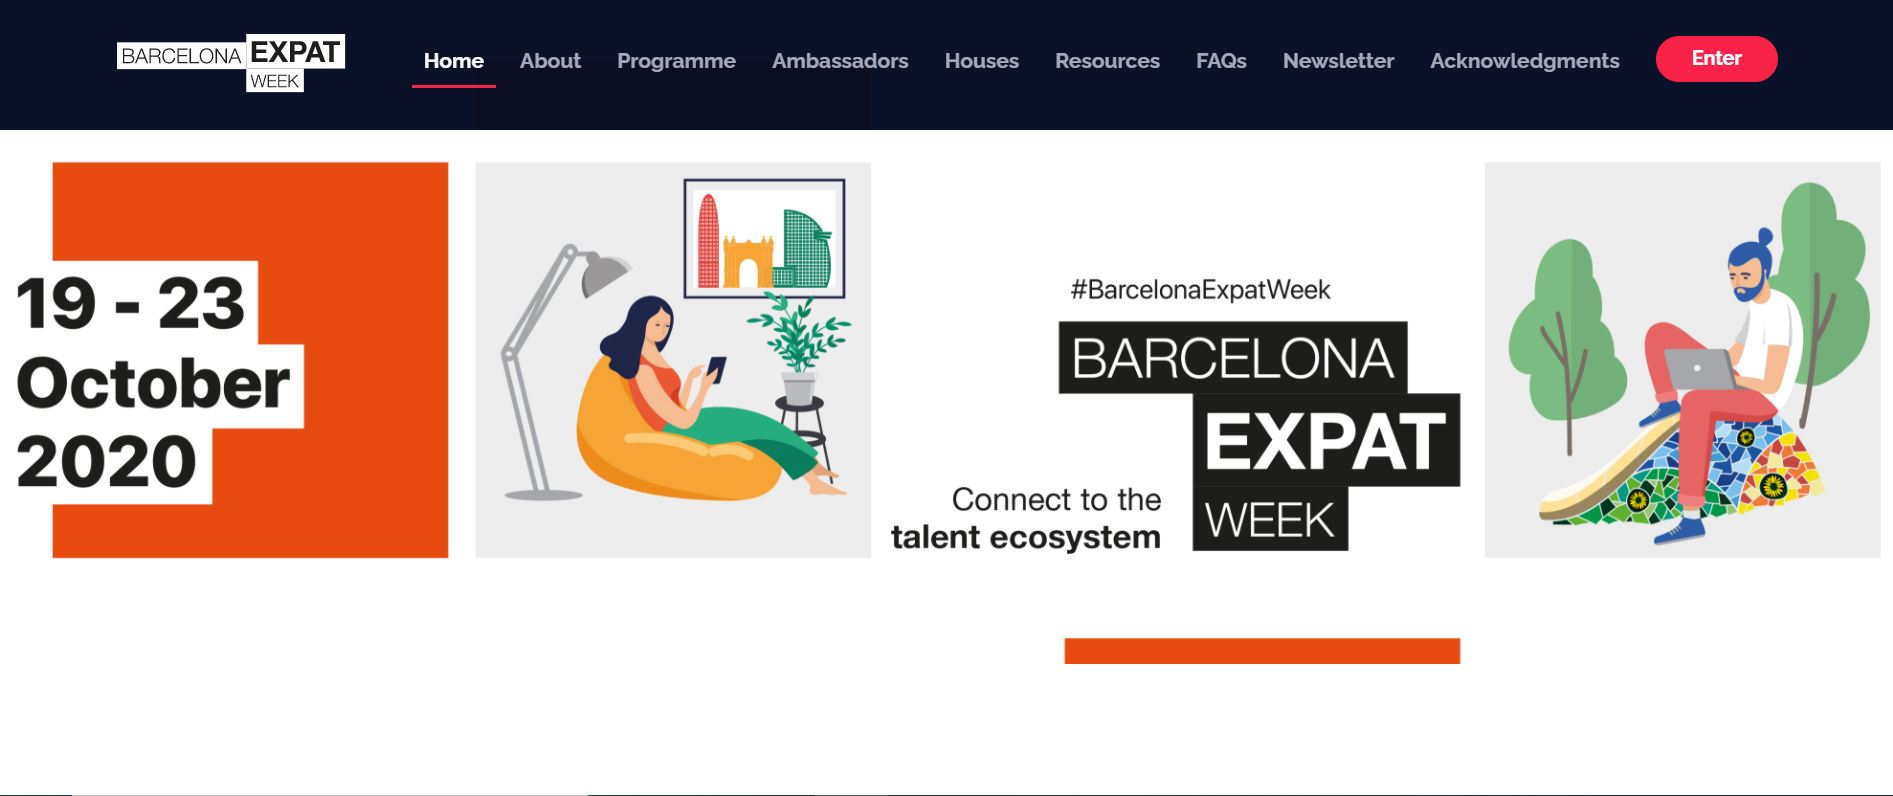 Barcelona Expat Week 2020 (image taken as screenshot from website)